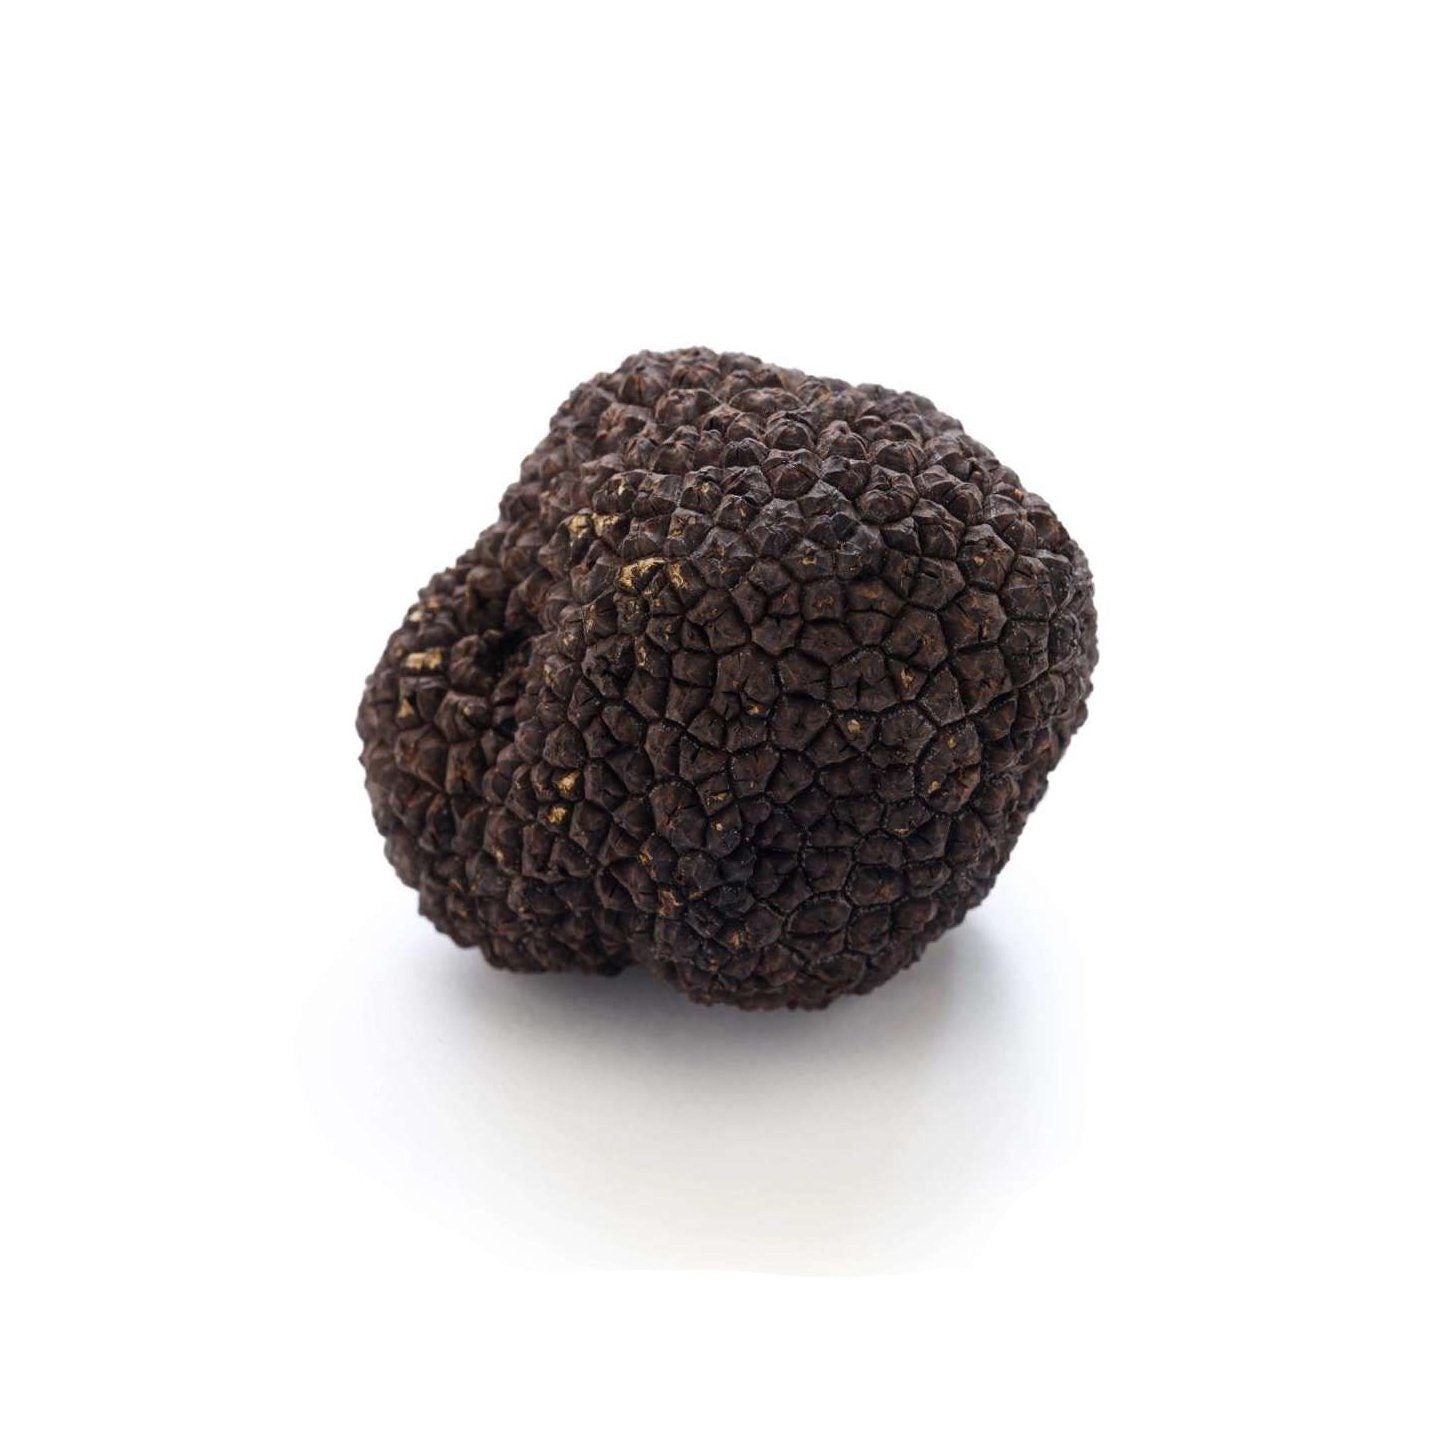 Slofoodgroup Black Truffles, Preserved Whole Black Truffles Tuber Aestivum Preserved in Brine 30 Gram Net Weight Truffles - Truffle Mushroom Gourm